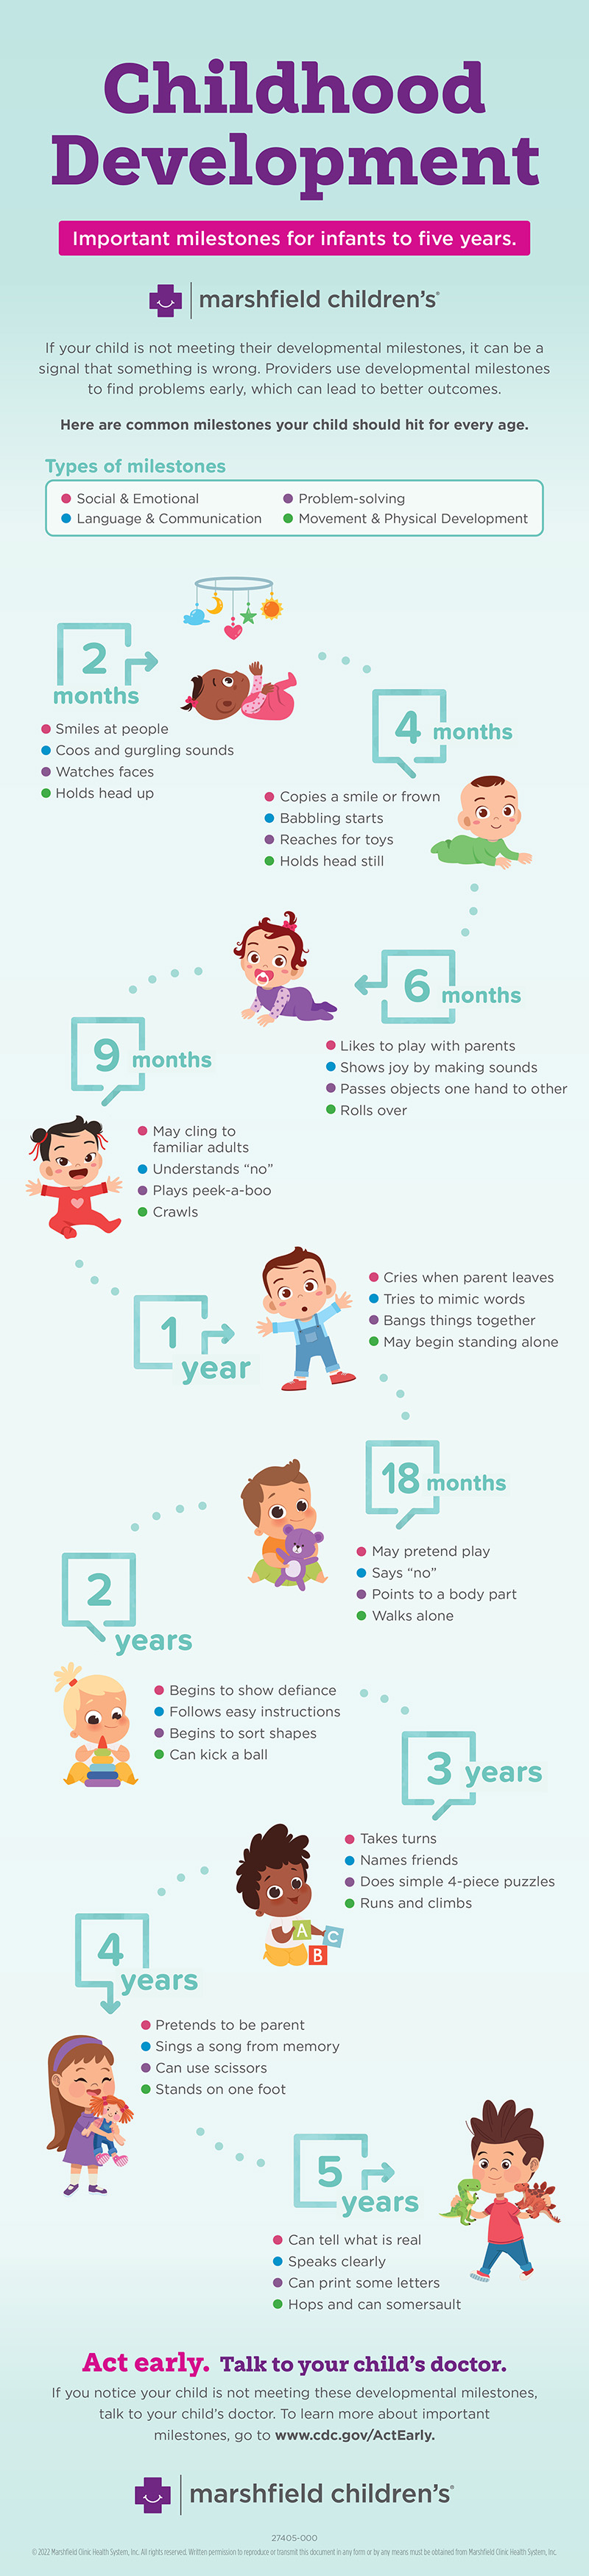 childhood development infographic